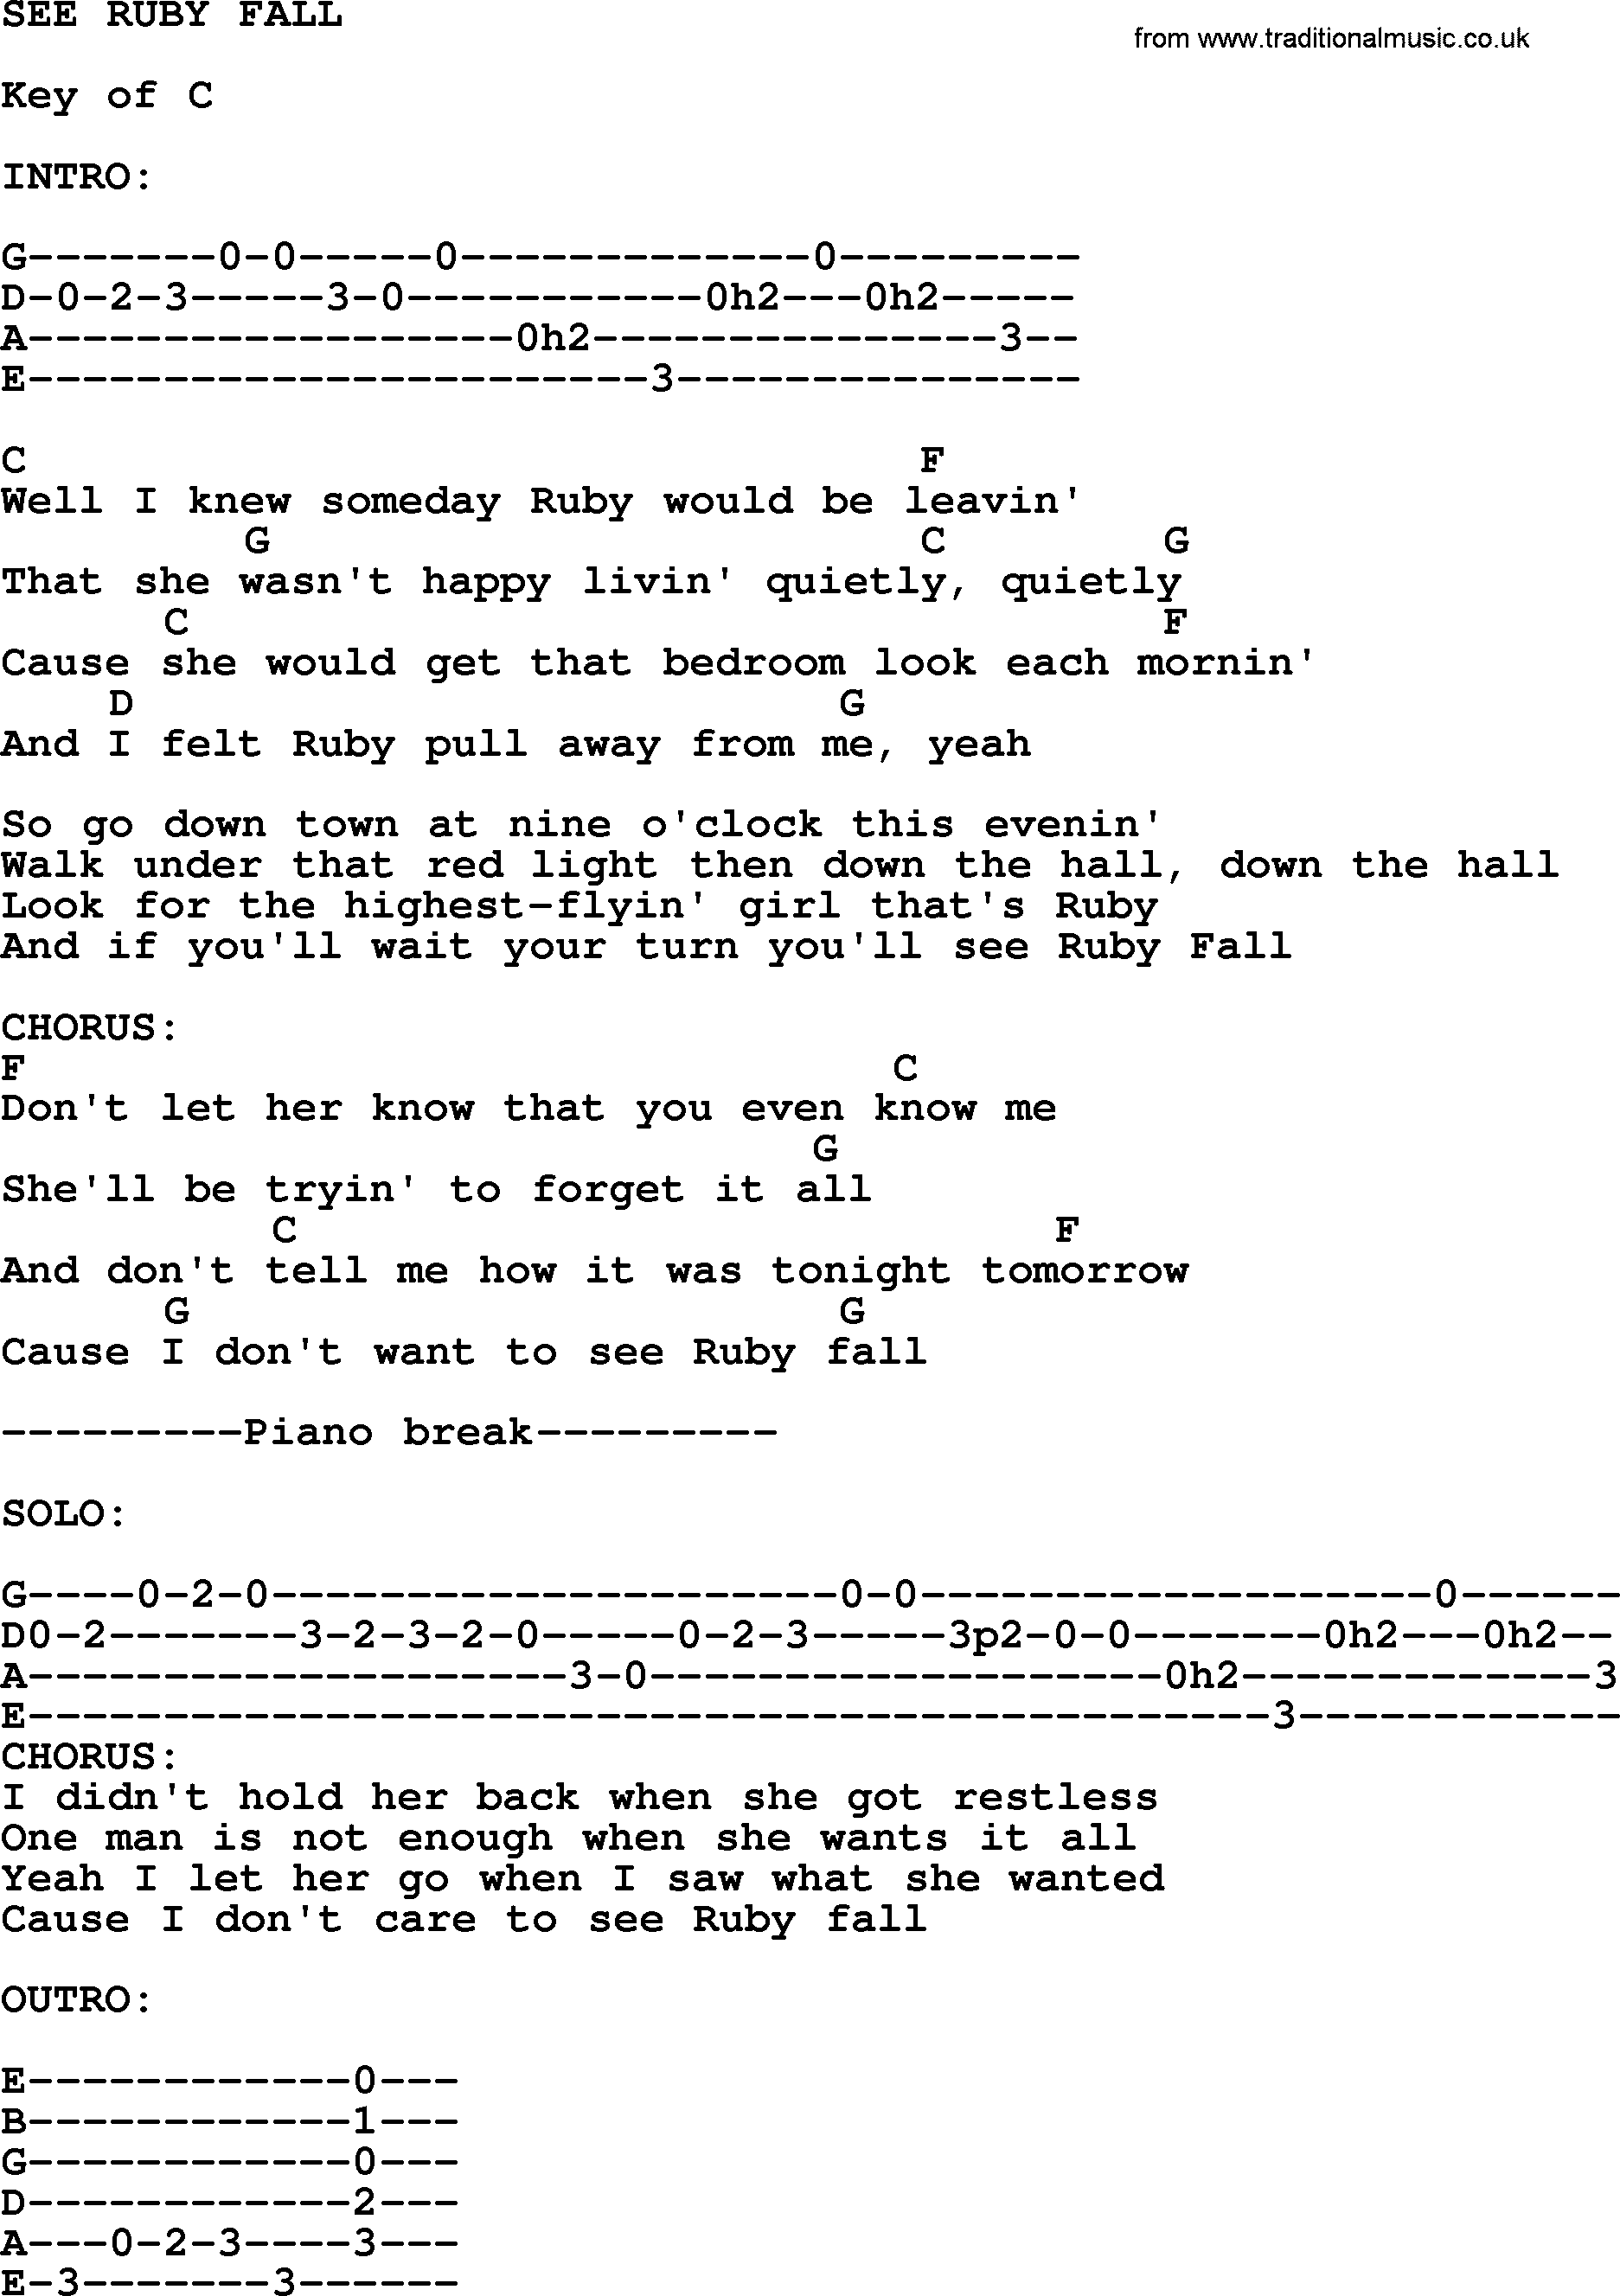 Johnny Cash song See Ruby Fall, lyrics and chords